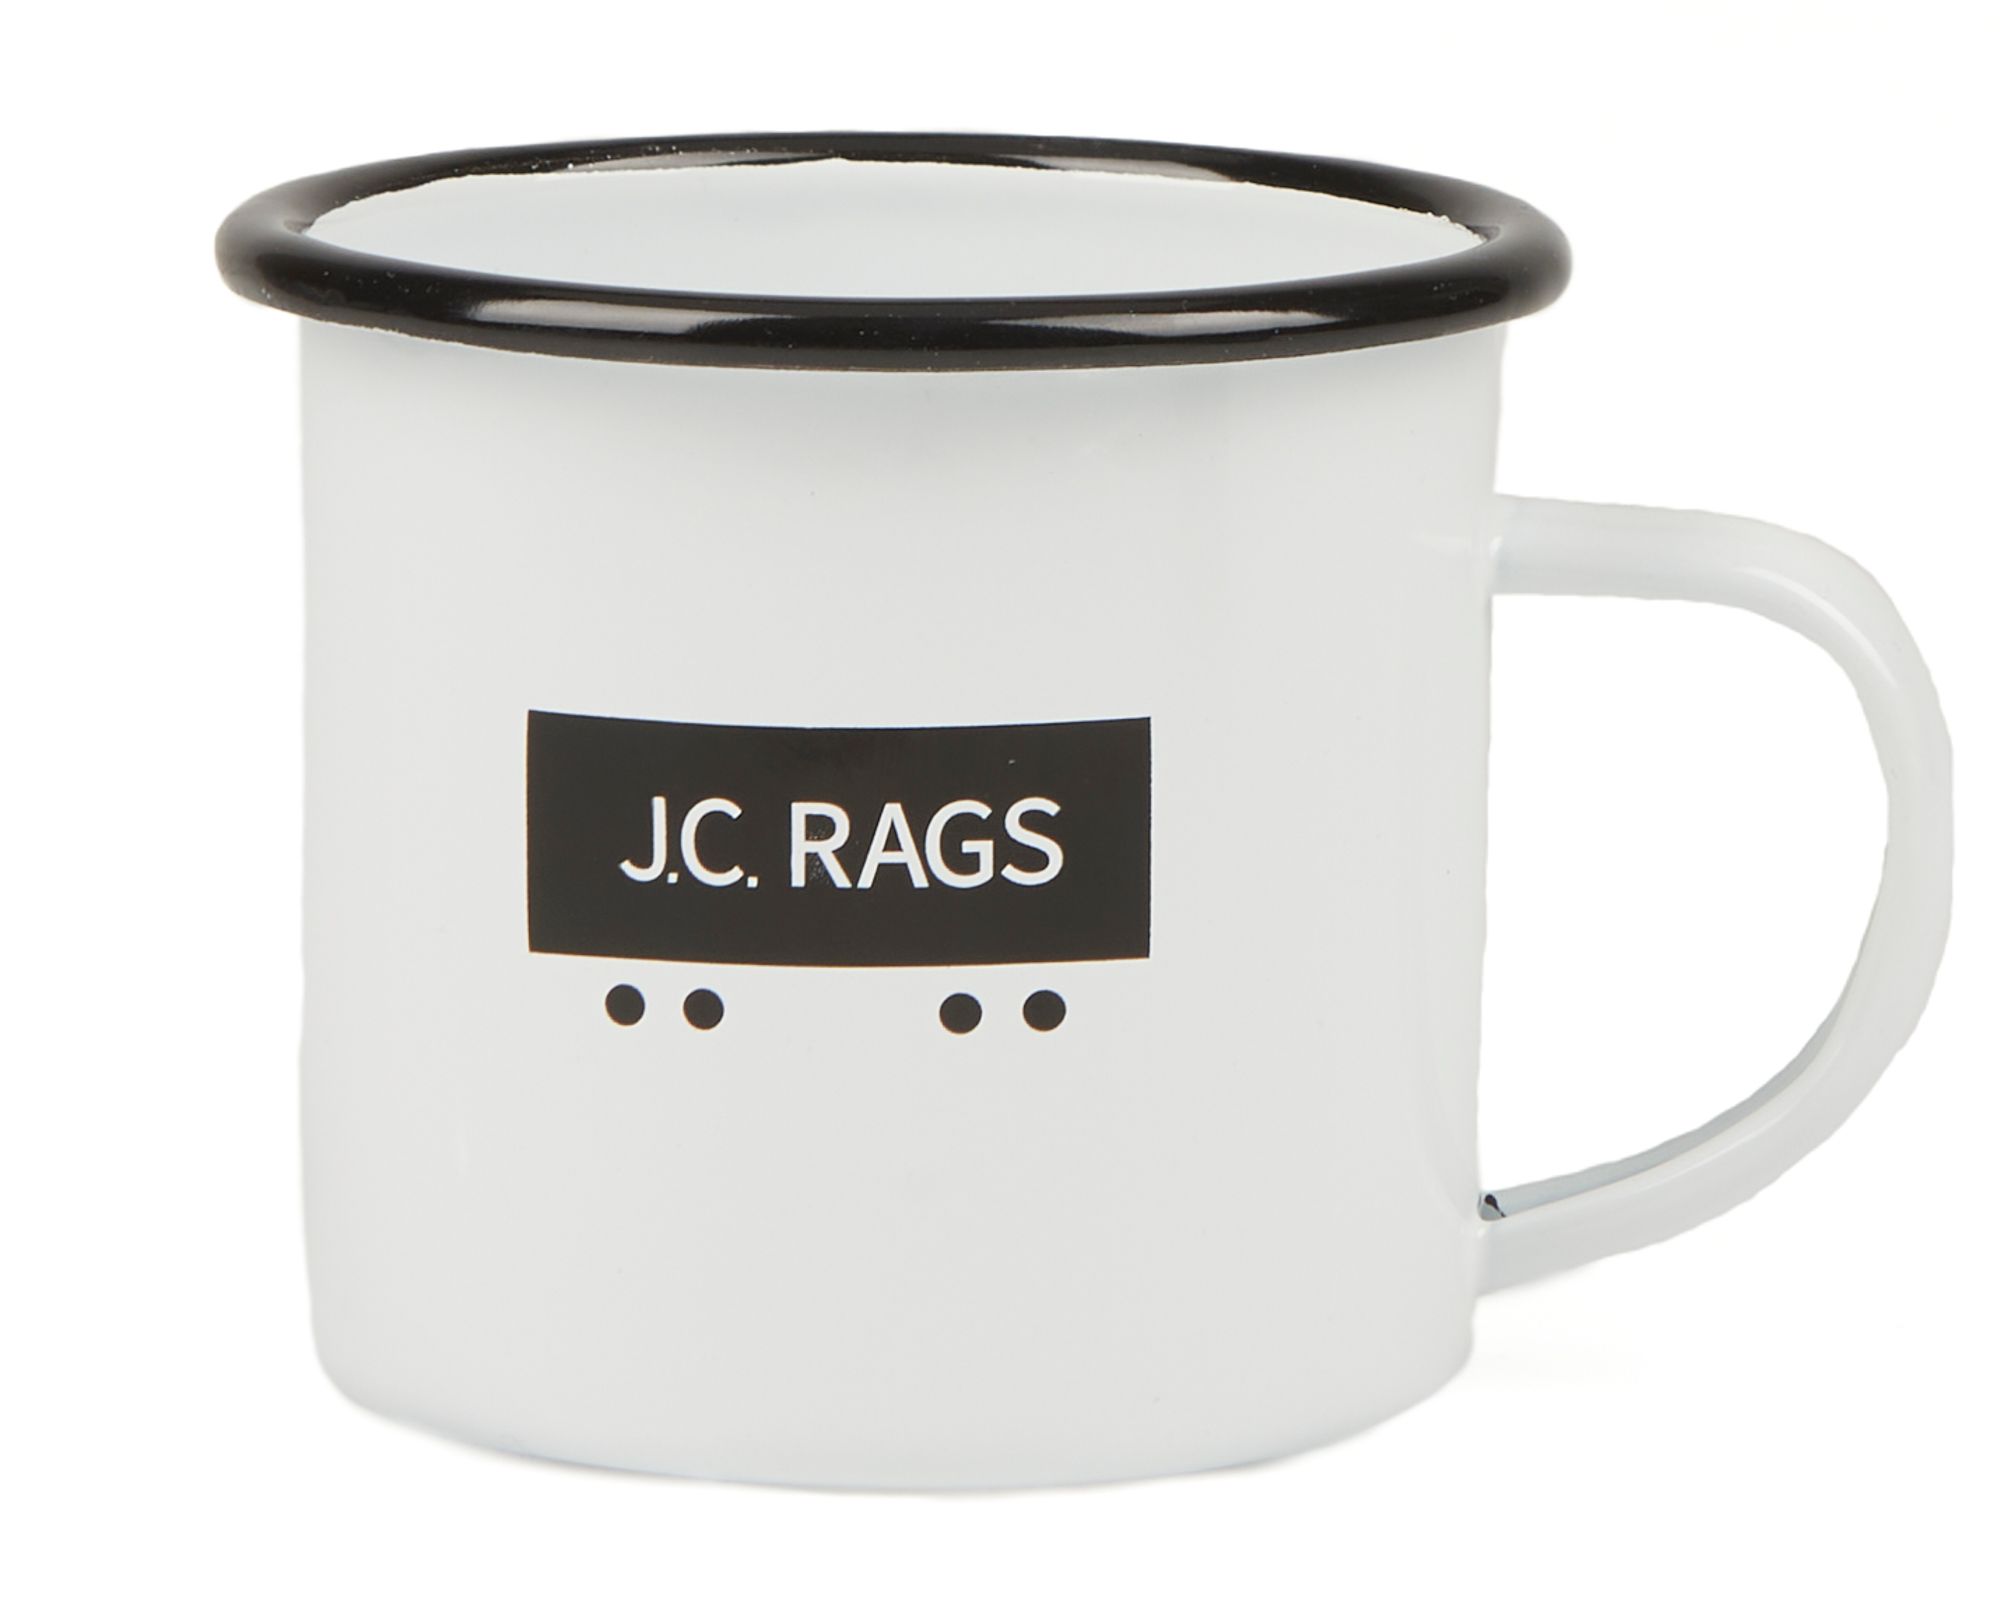 J.C. RAGS Mok Wit 080061-001-0